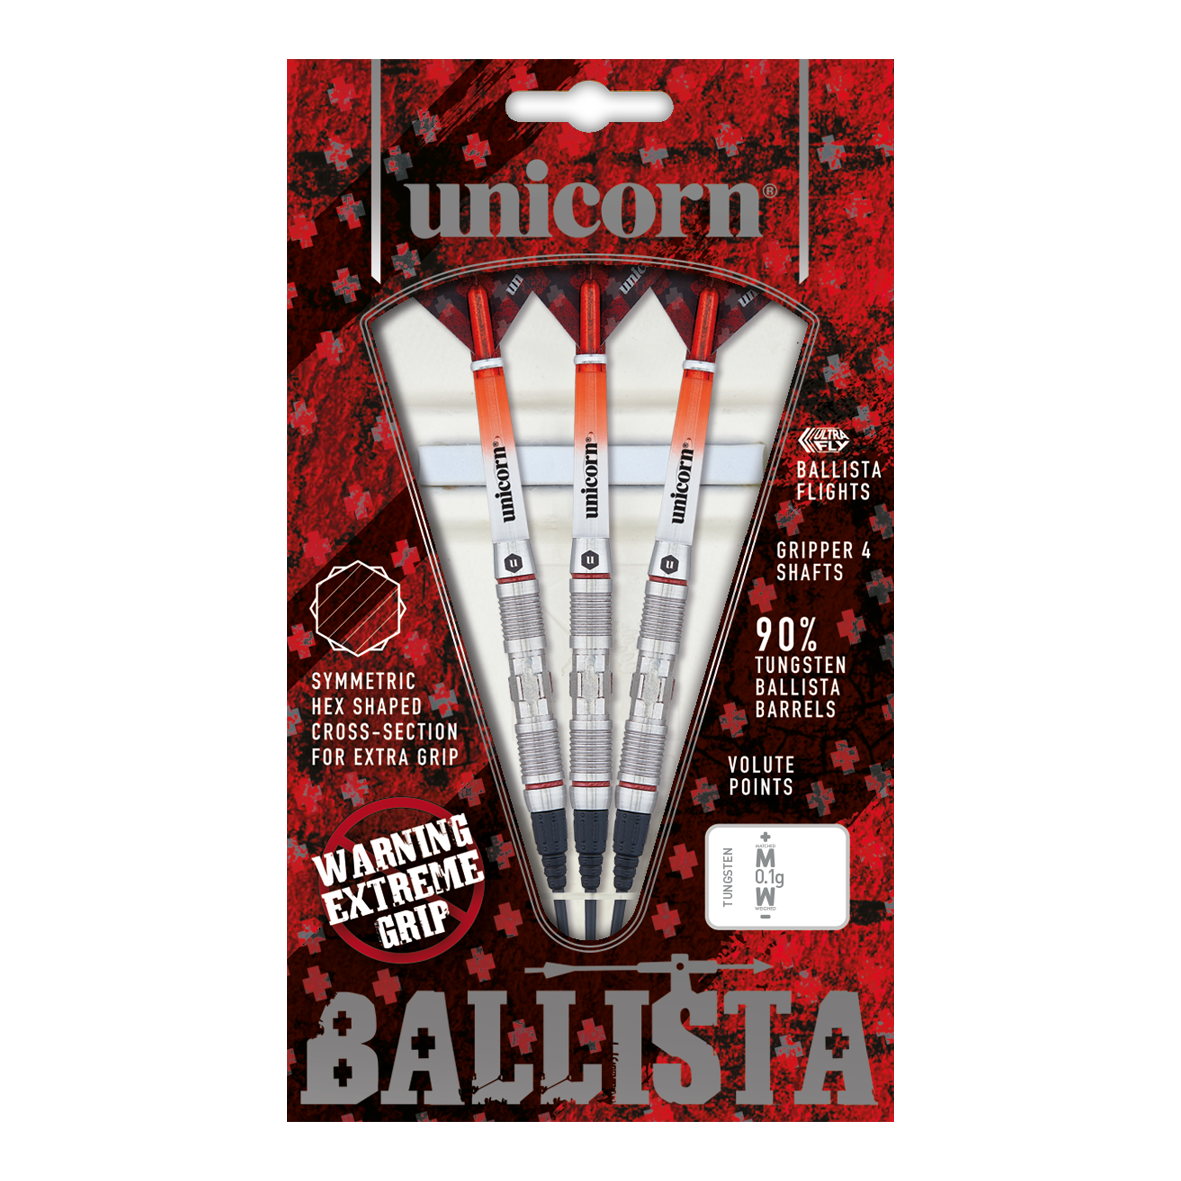 Fléchettes souples Unicorn Ballista Style 2